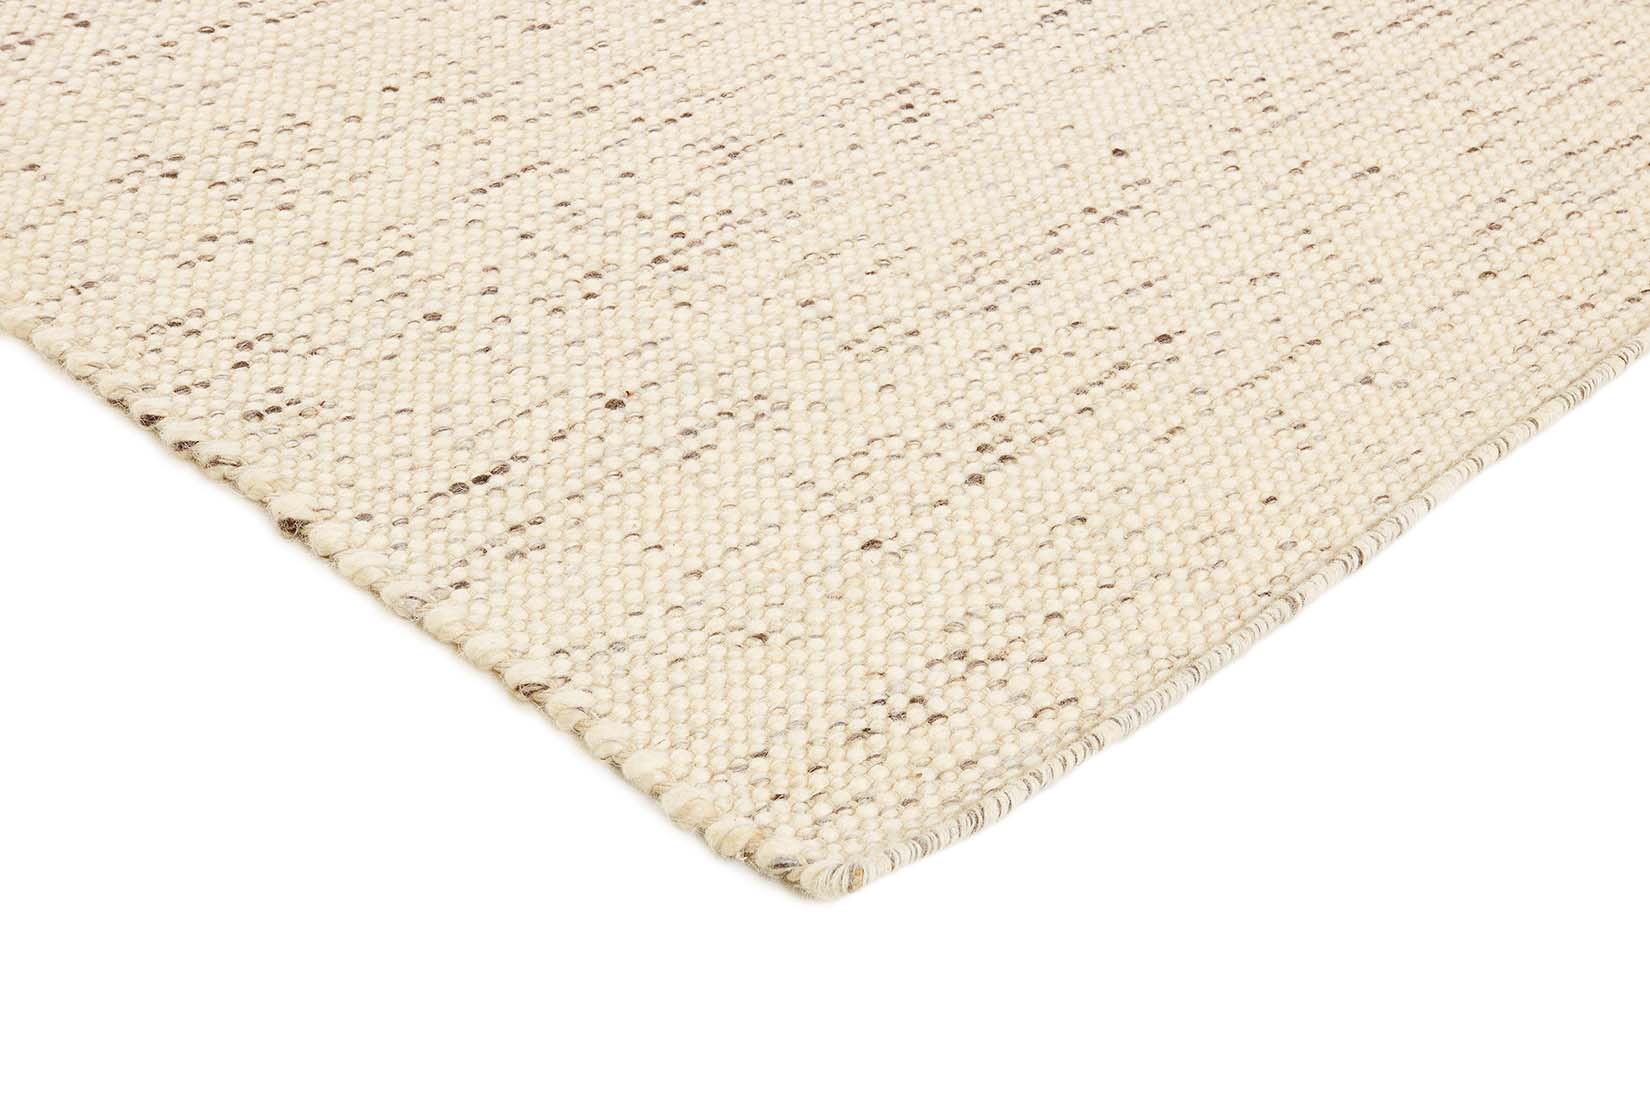 Brown textured area rug
